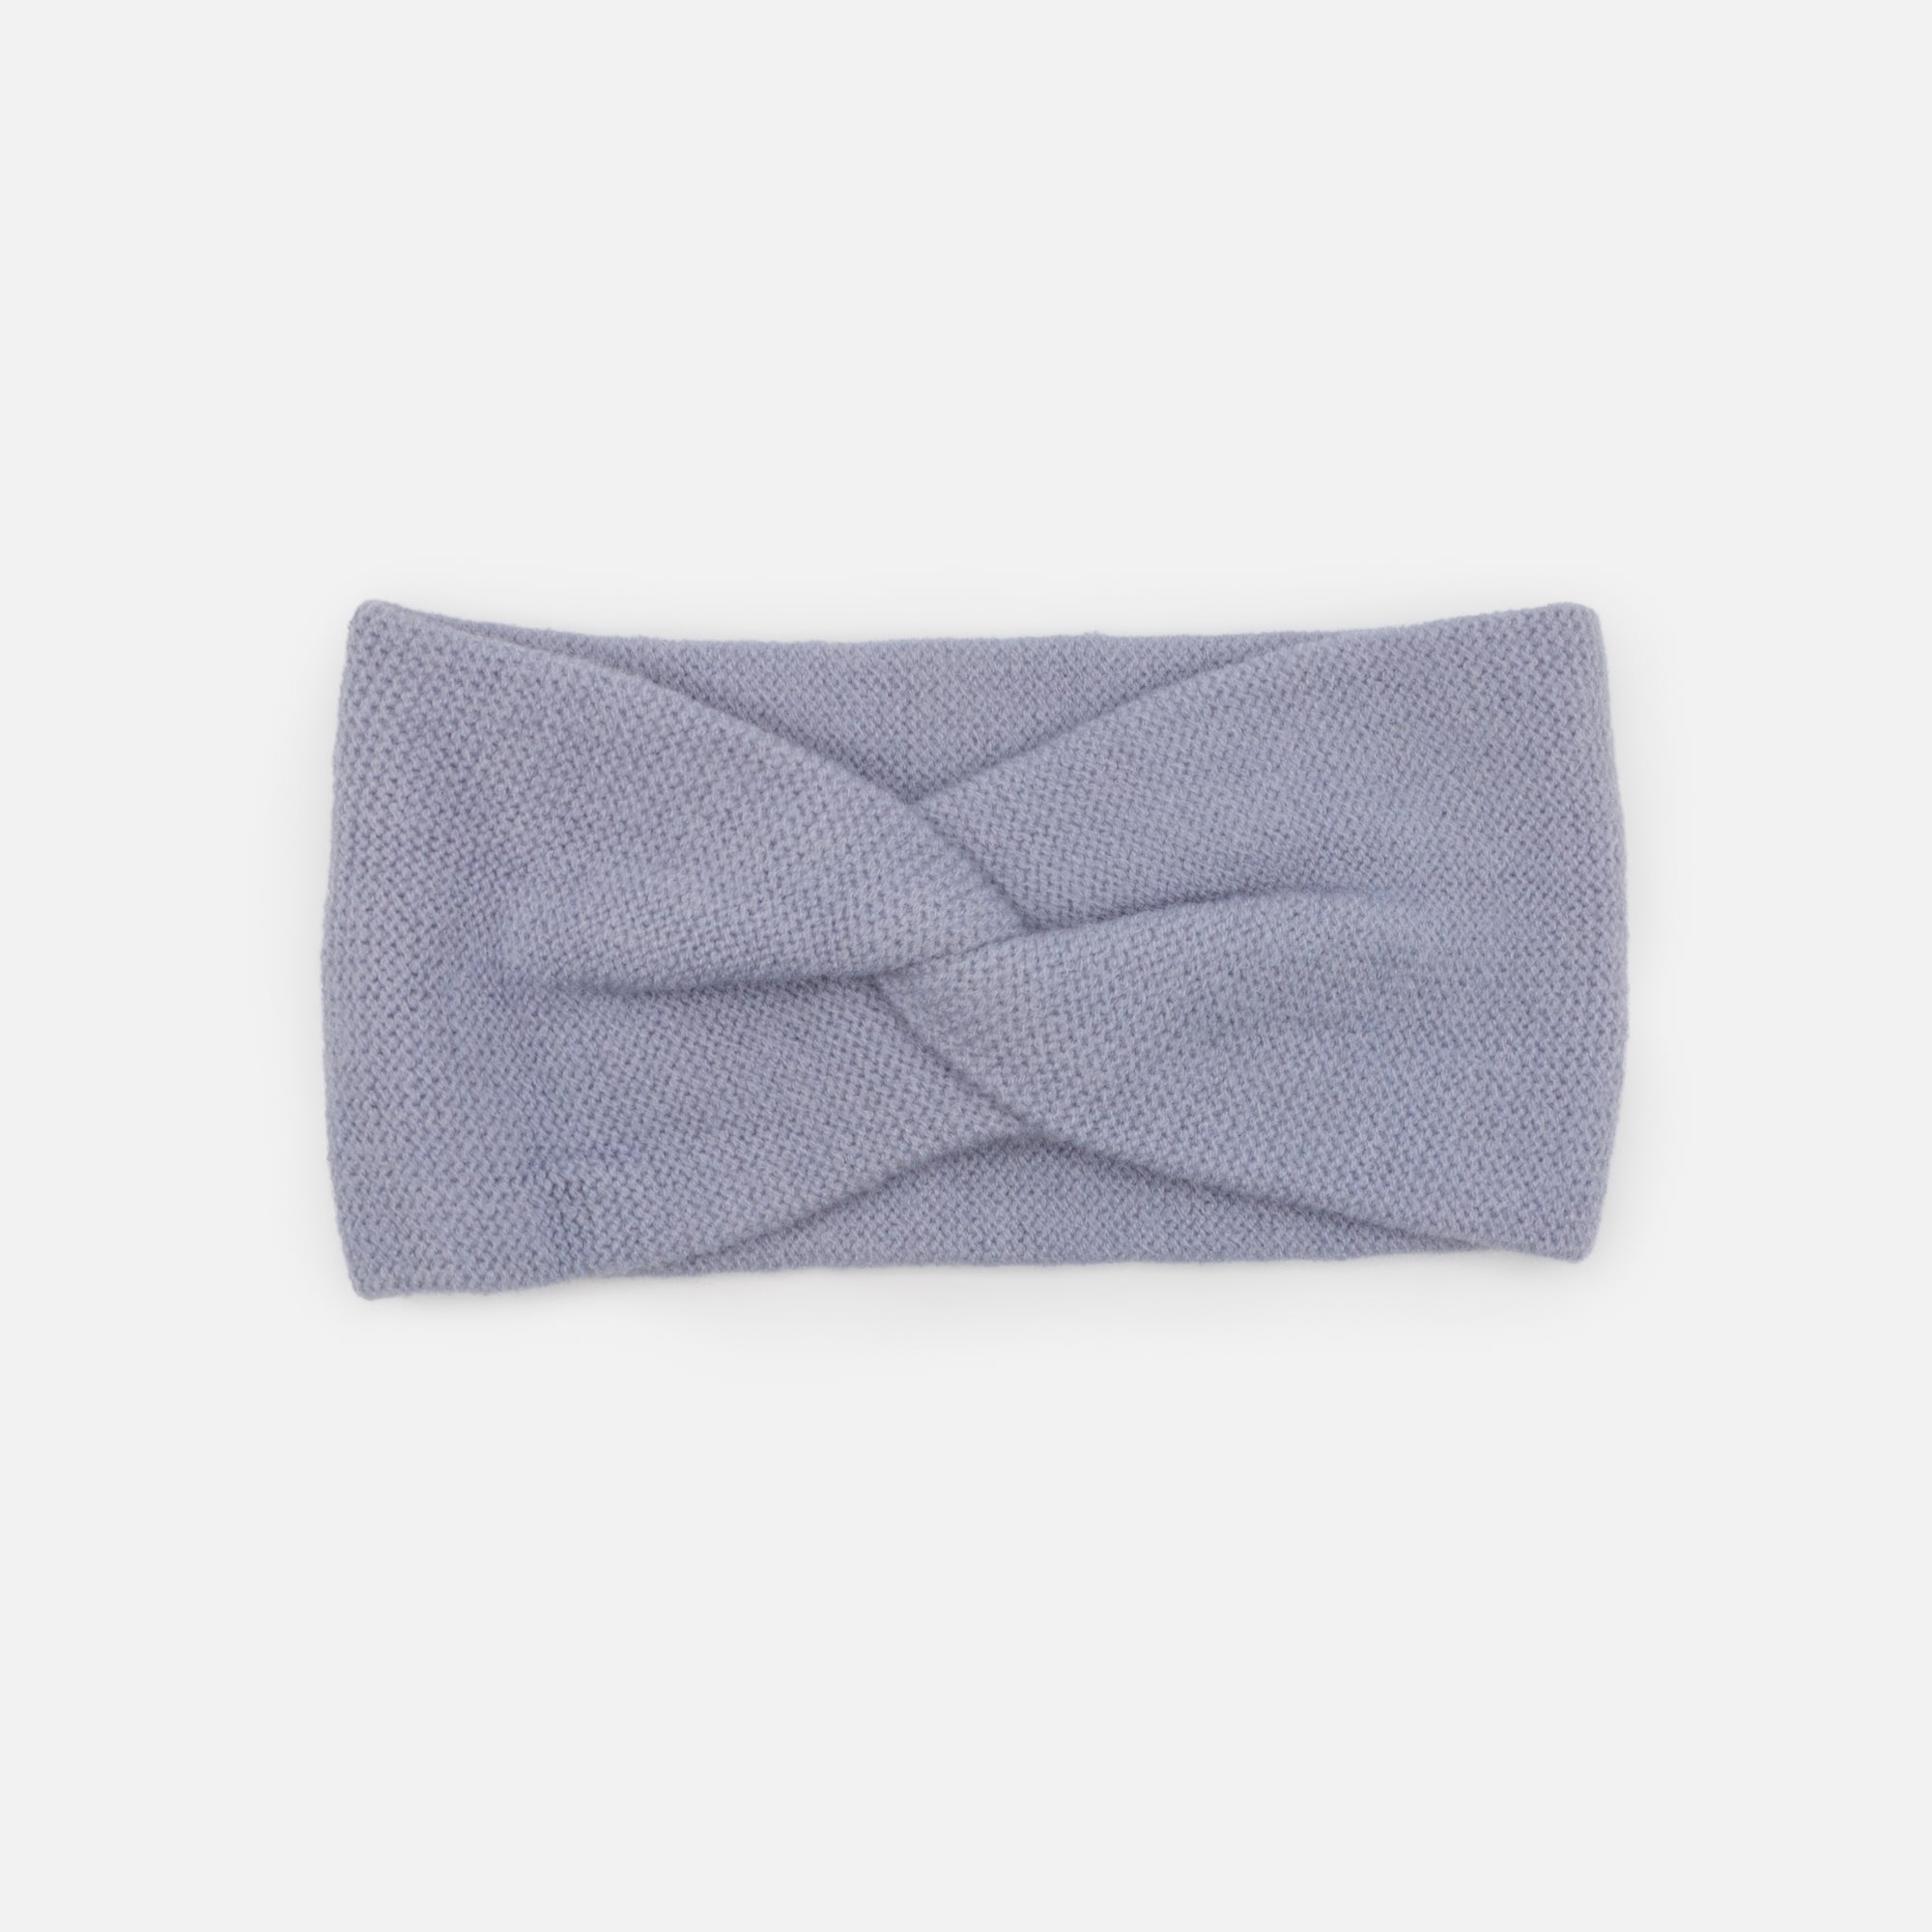 Powder blue small knit headband with buckle